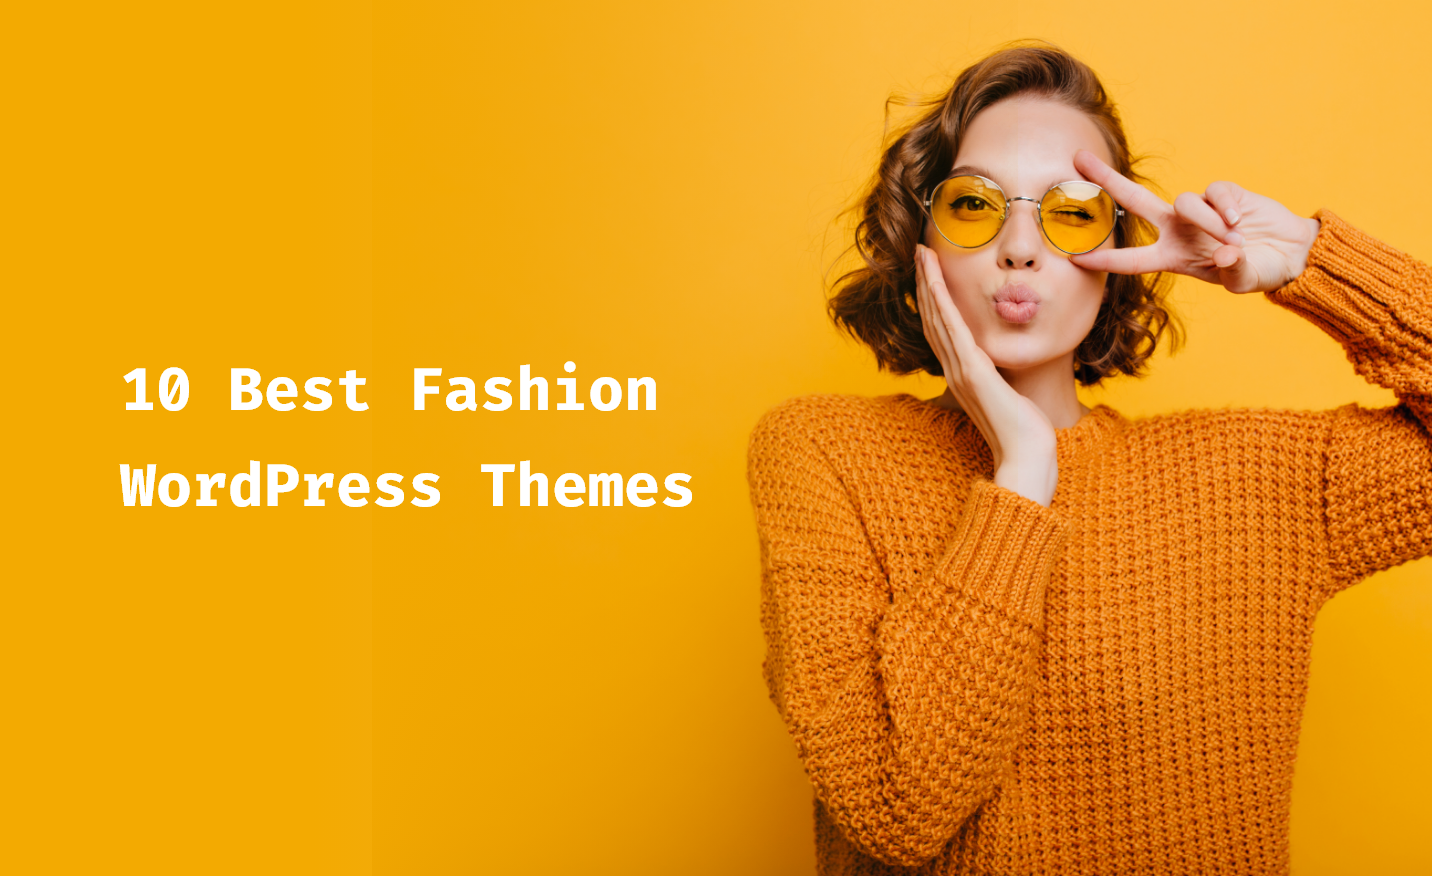 10 Best Fashion WordPress Themes in 2021